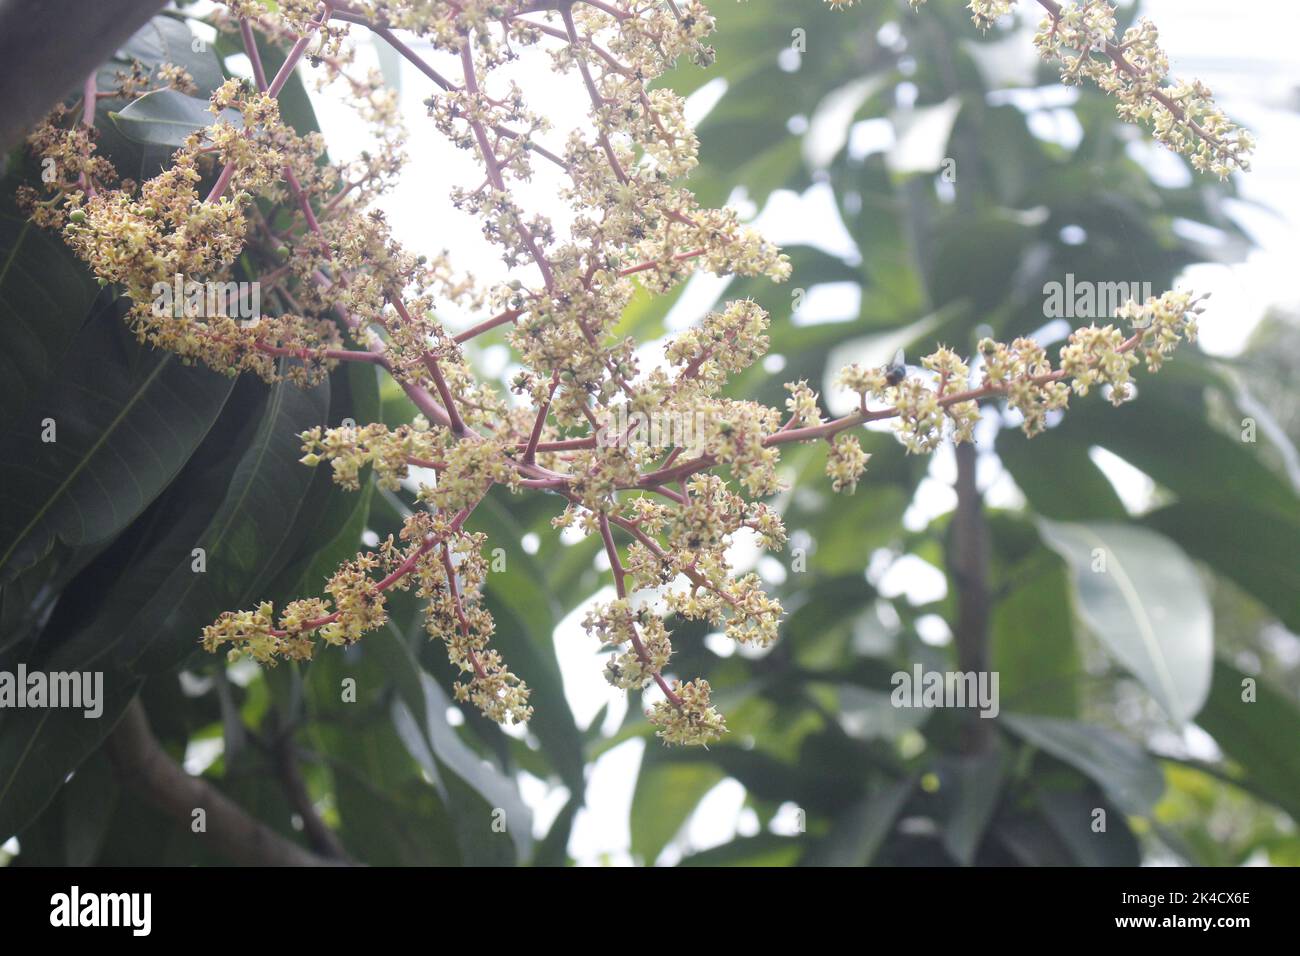 https://c8.alamy.com/comp/2K4CX6E/a-closeup-of-mango-flowers-mangifera-indica-growing-on-a-tree-2K4CX6E.jpg